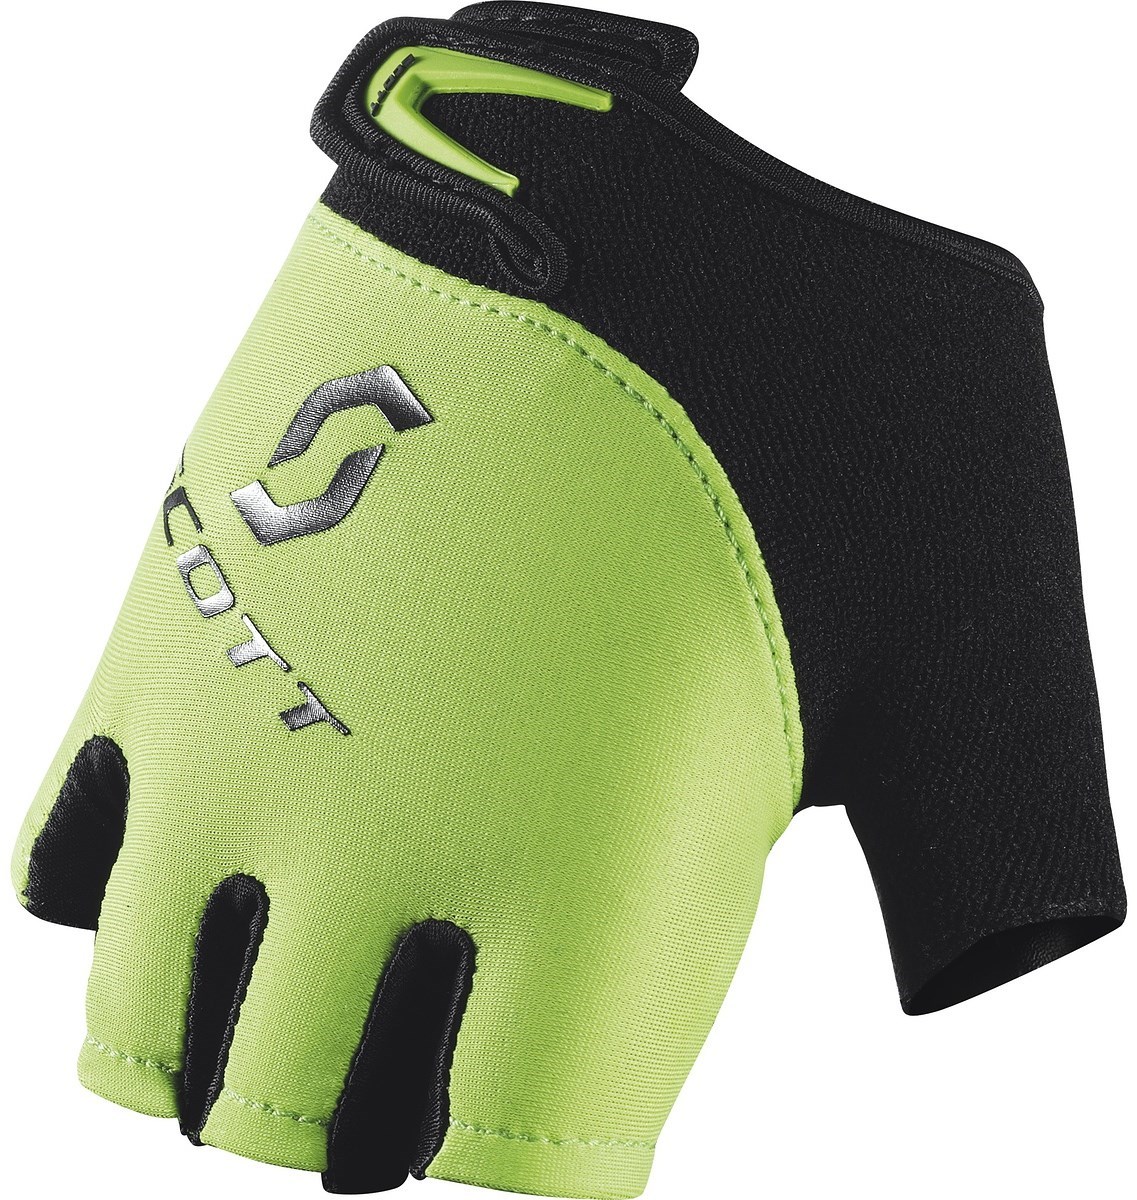 Scott Aspect Kids Short Finger Cycling Gloves product image